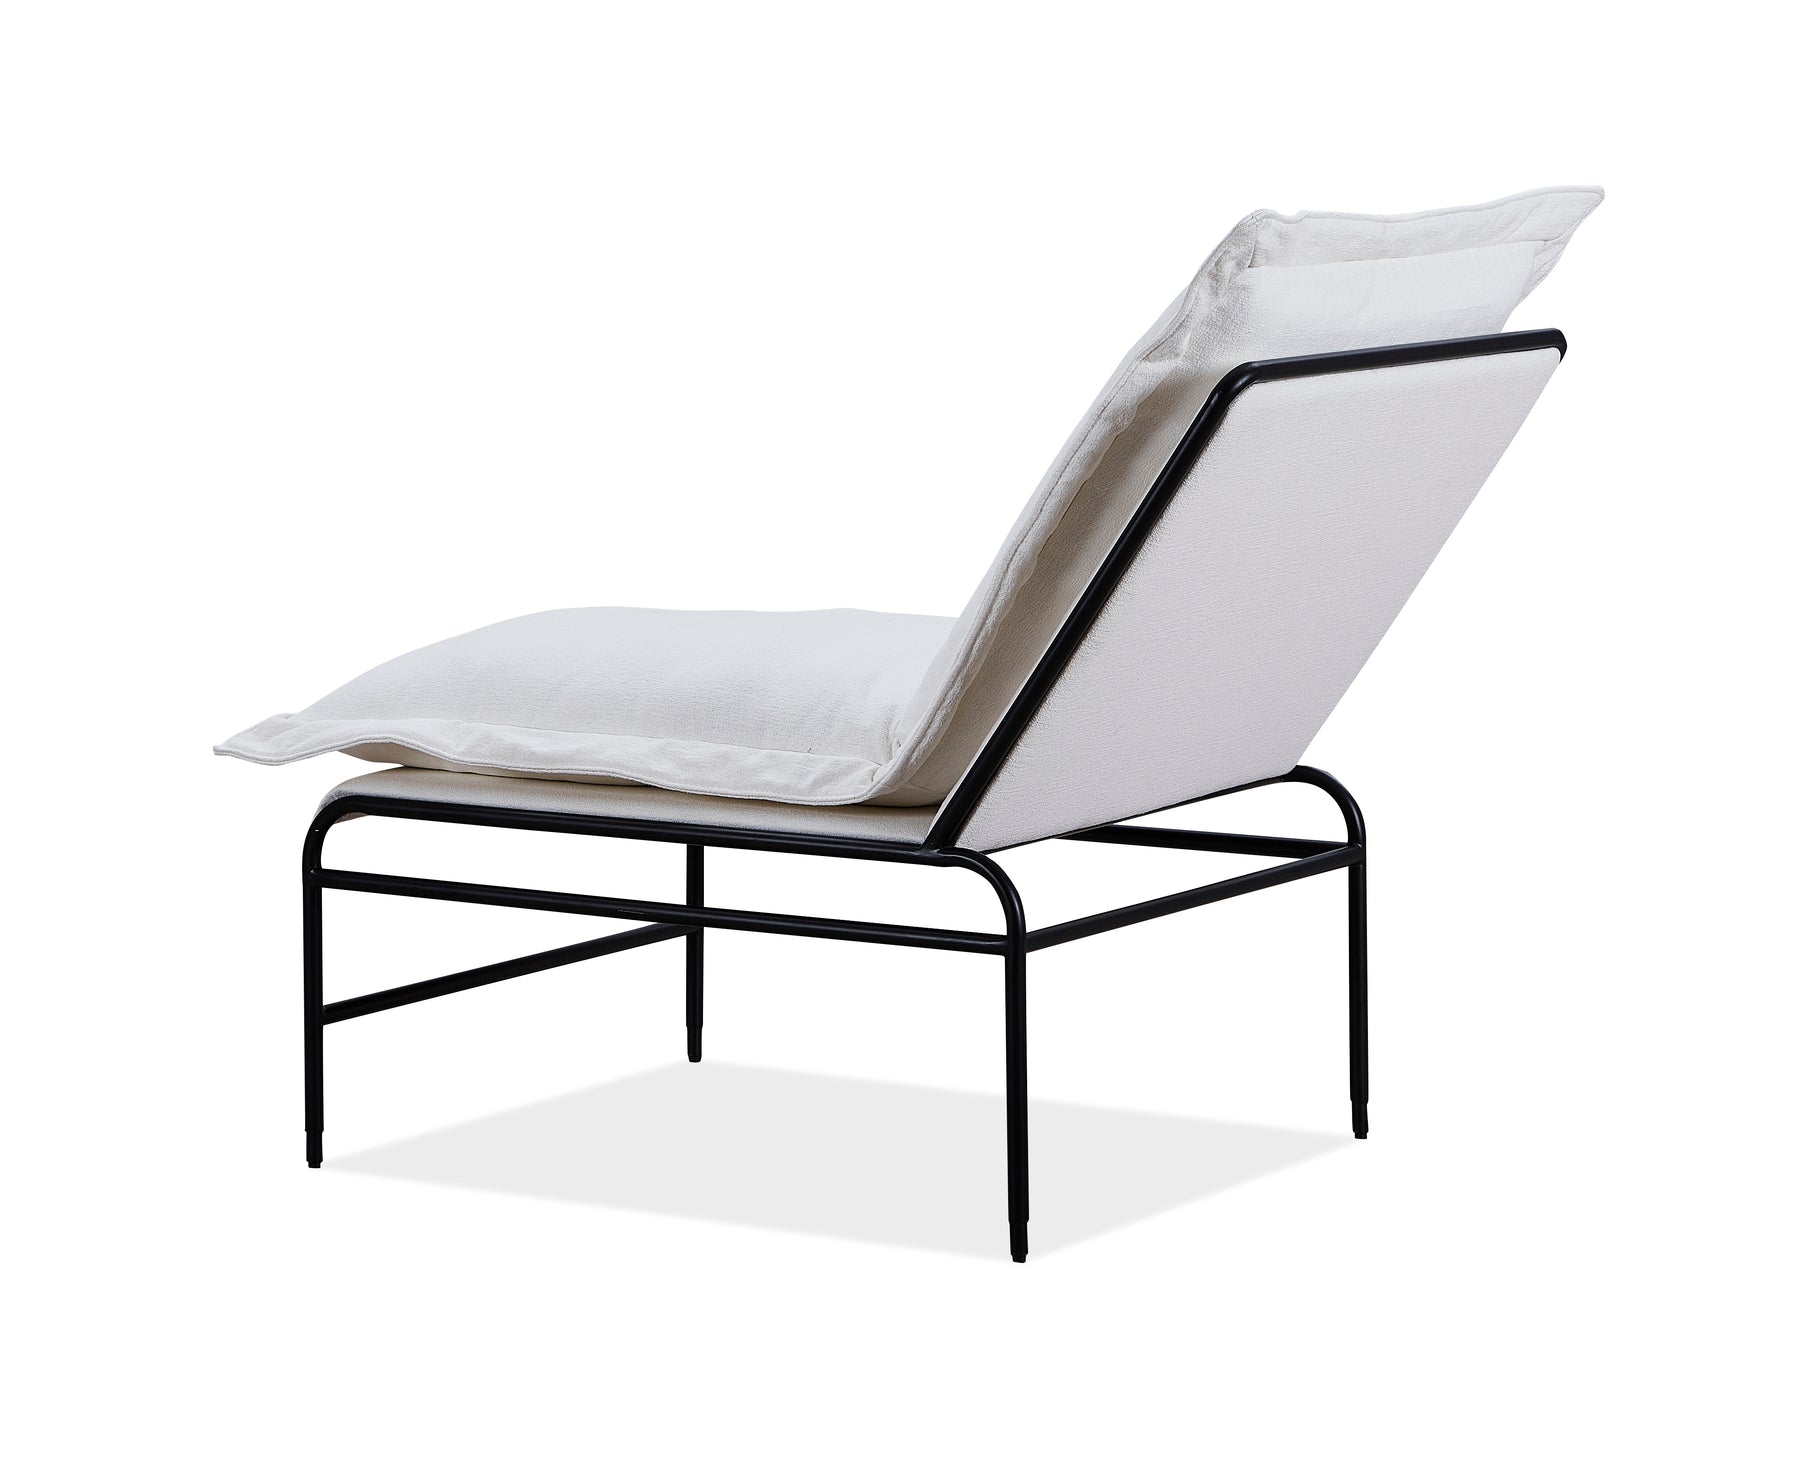 Cloud Lounge Chair - Natural White - BUBULAND HOME